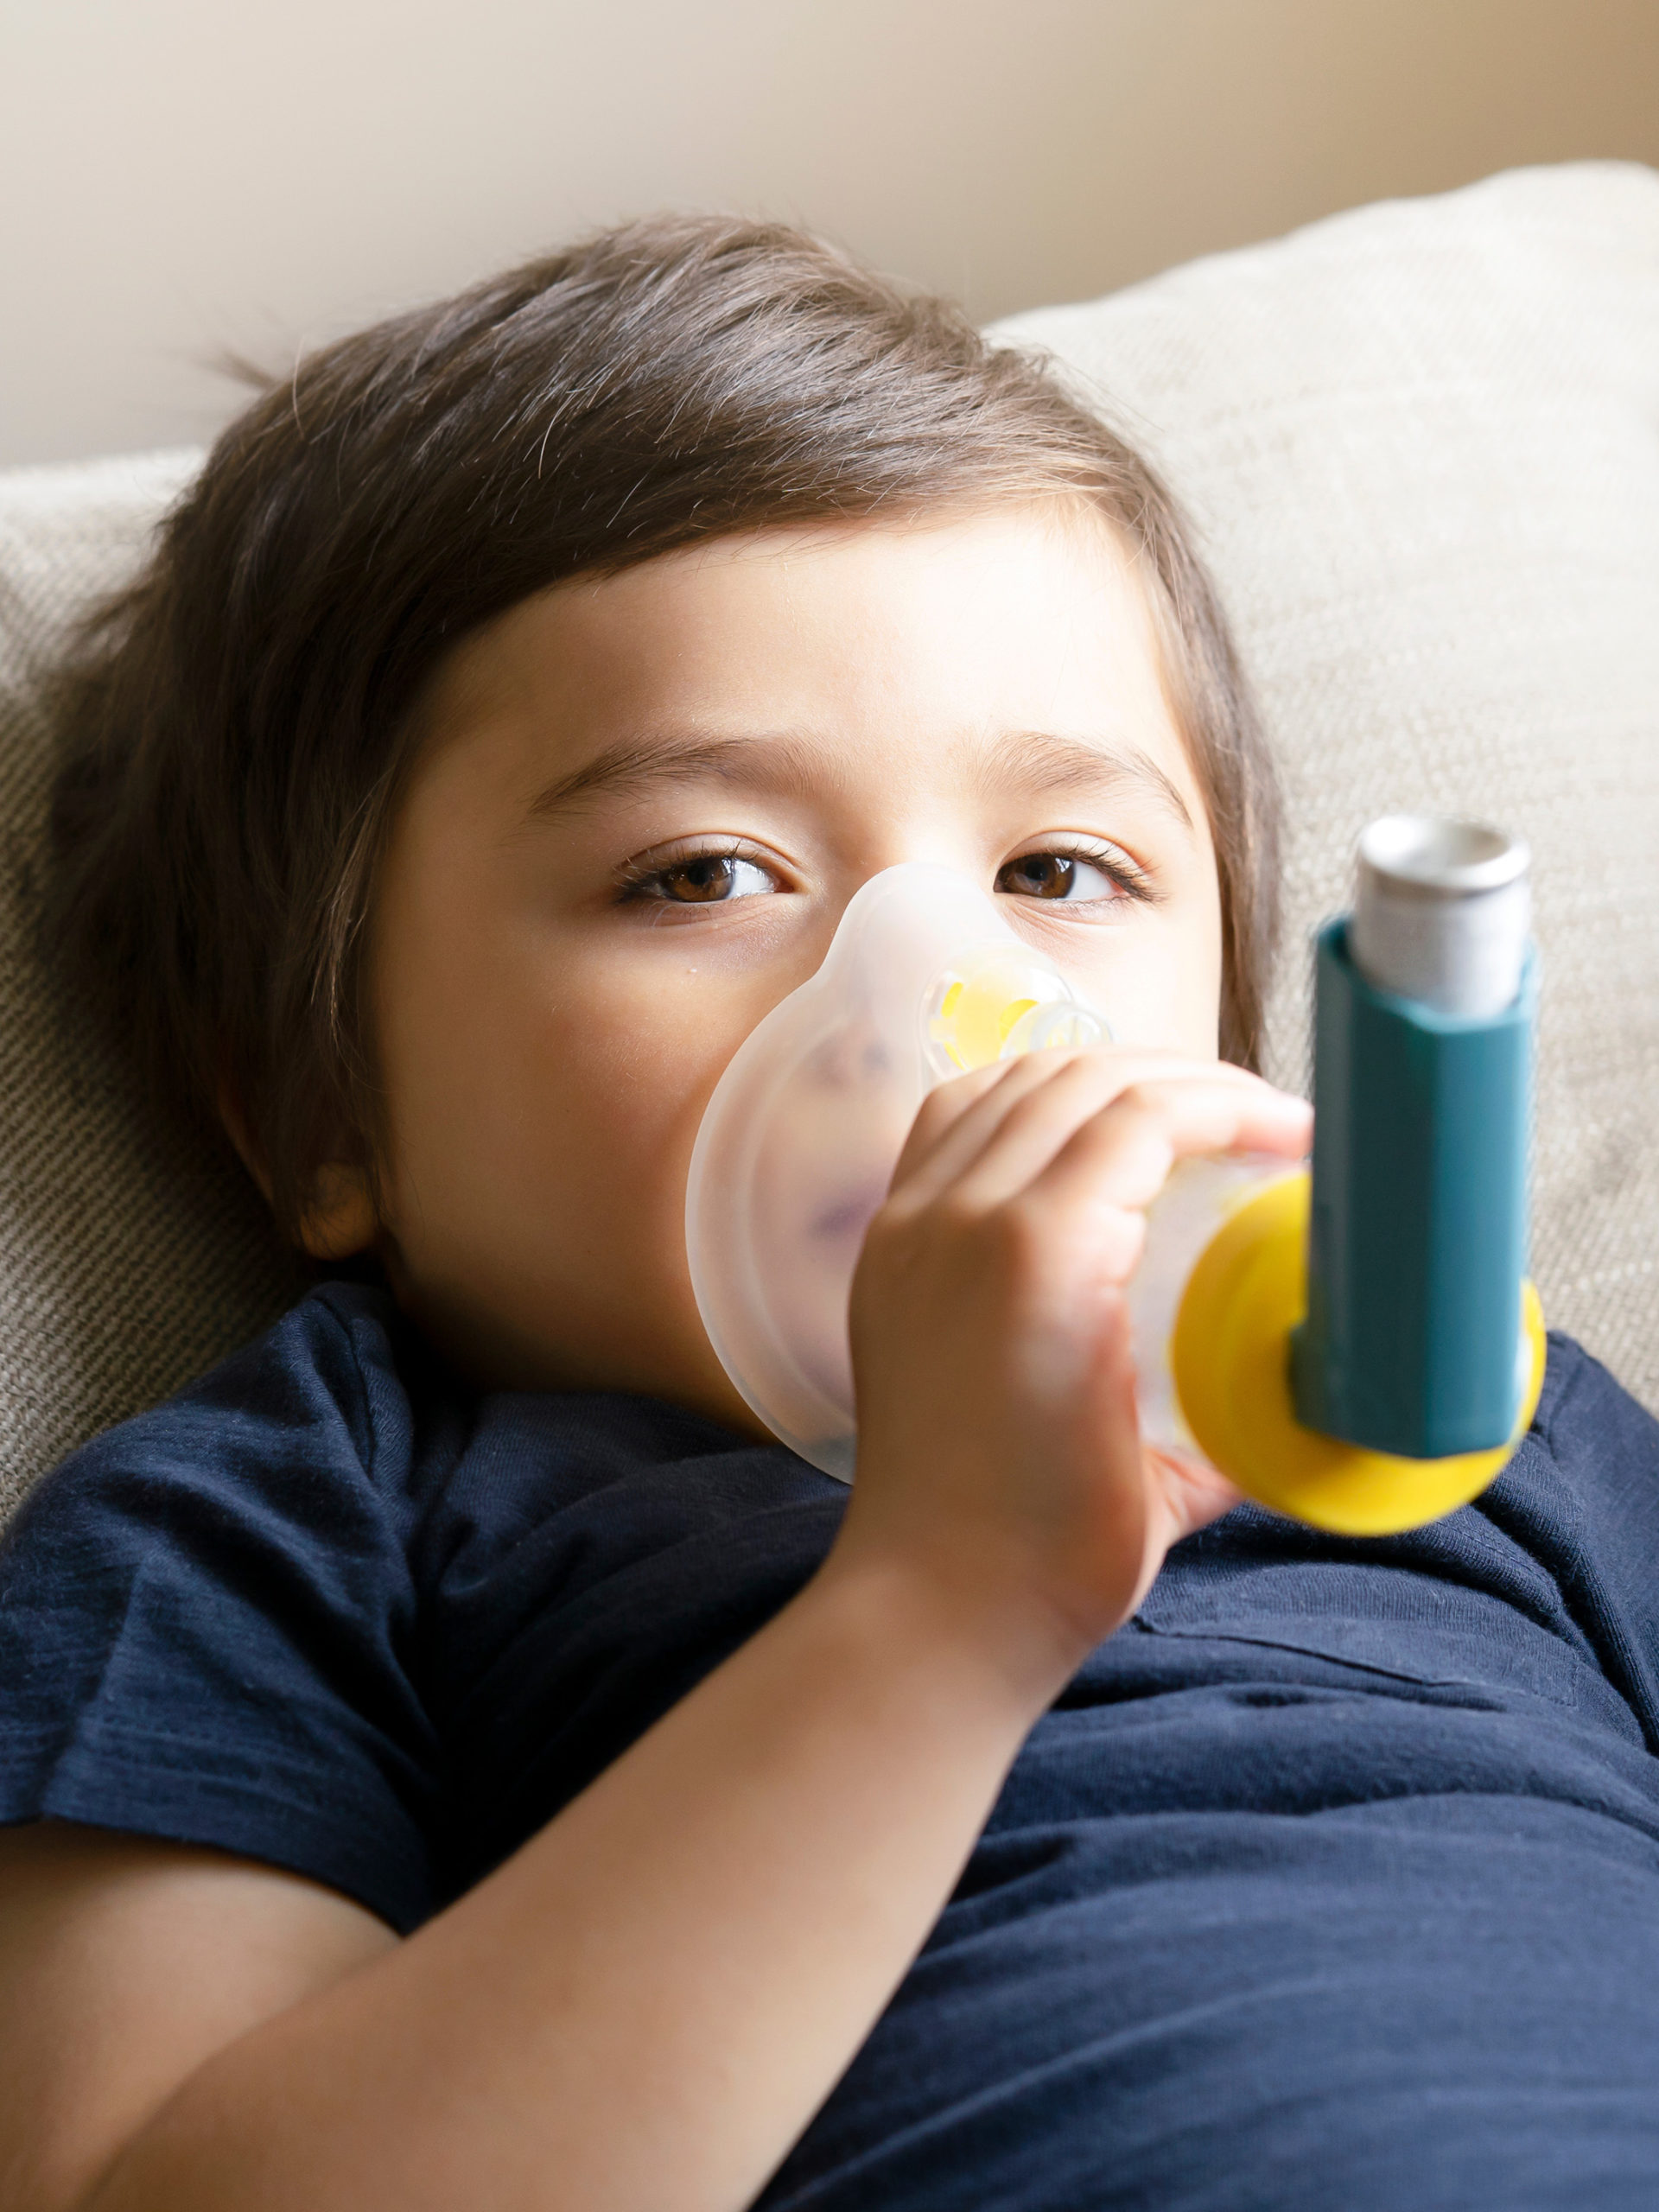 young boy having asthma attack using an asthma inhaler